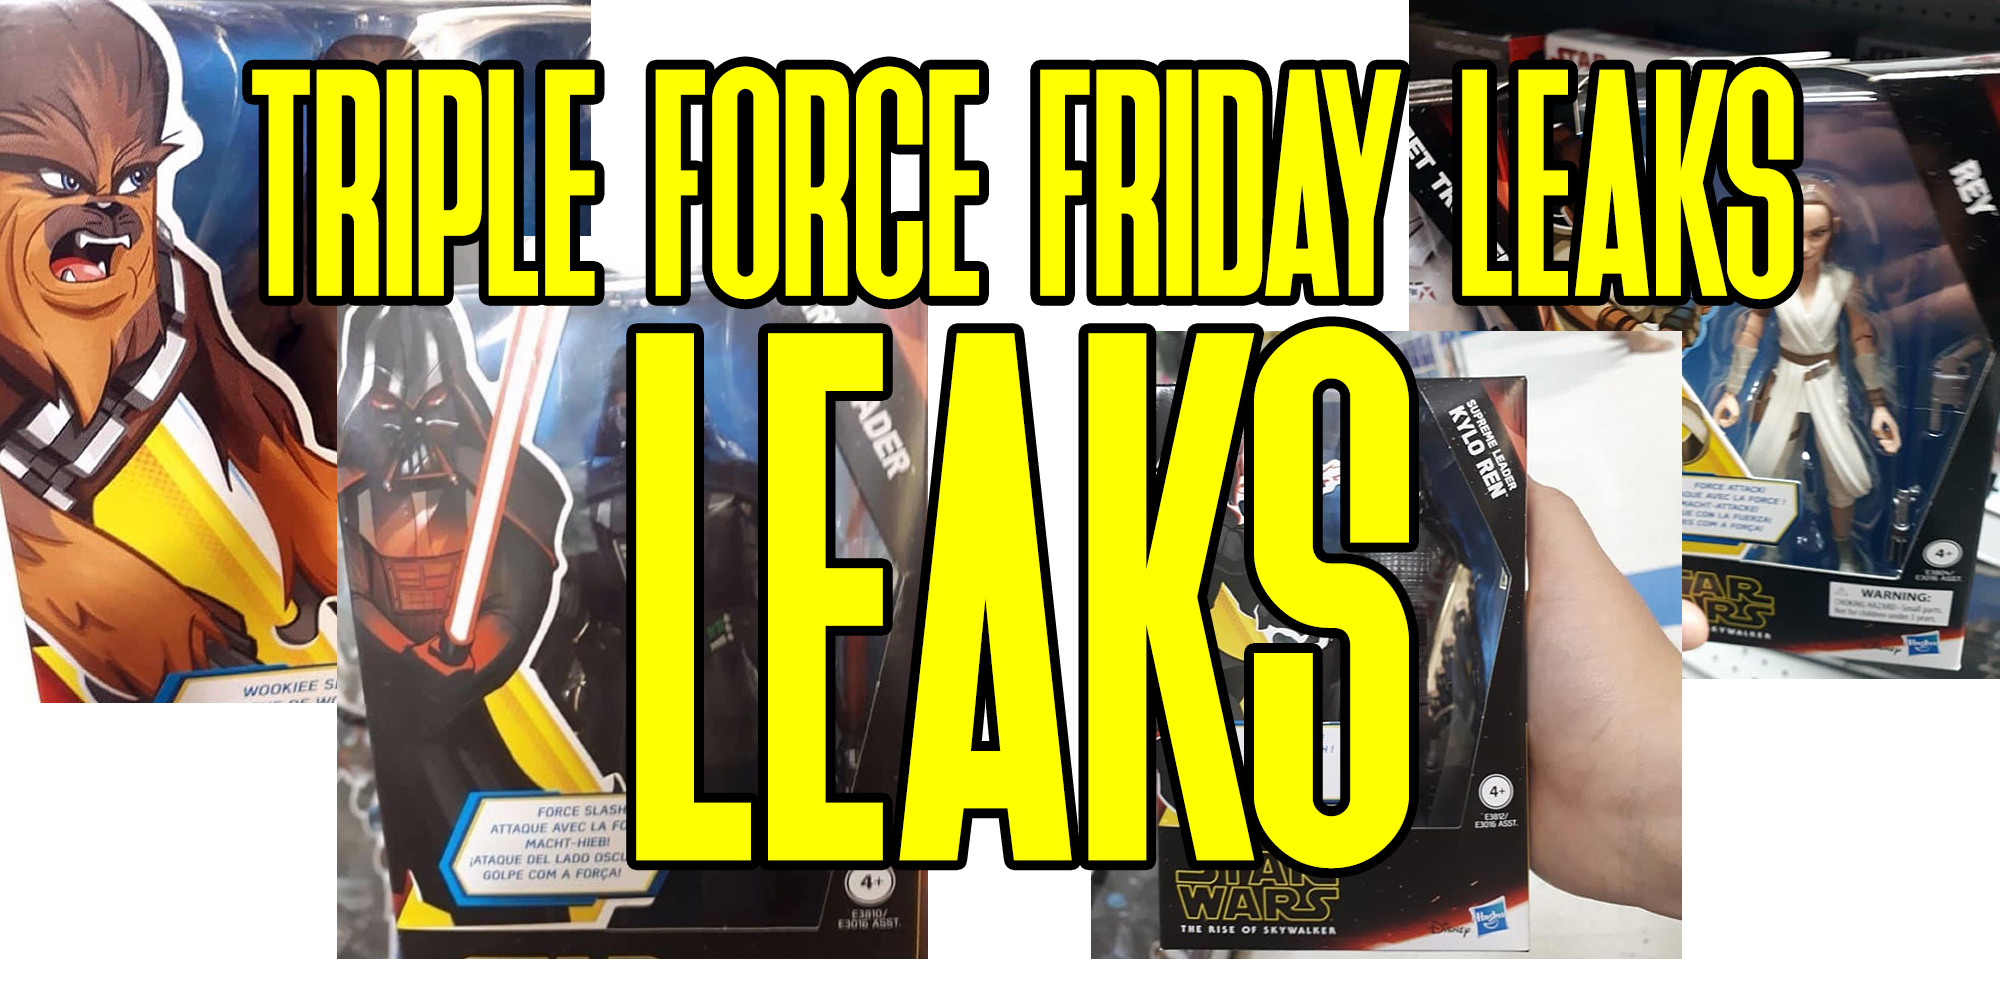 Triple Force Friday Leaks Have Begun!